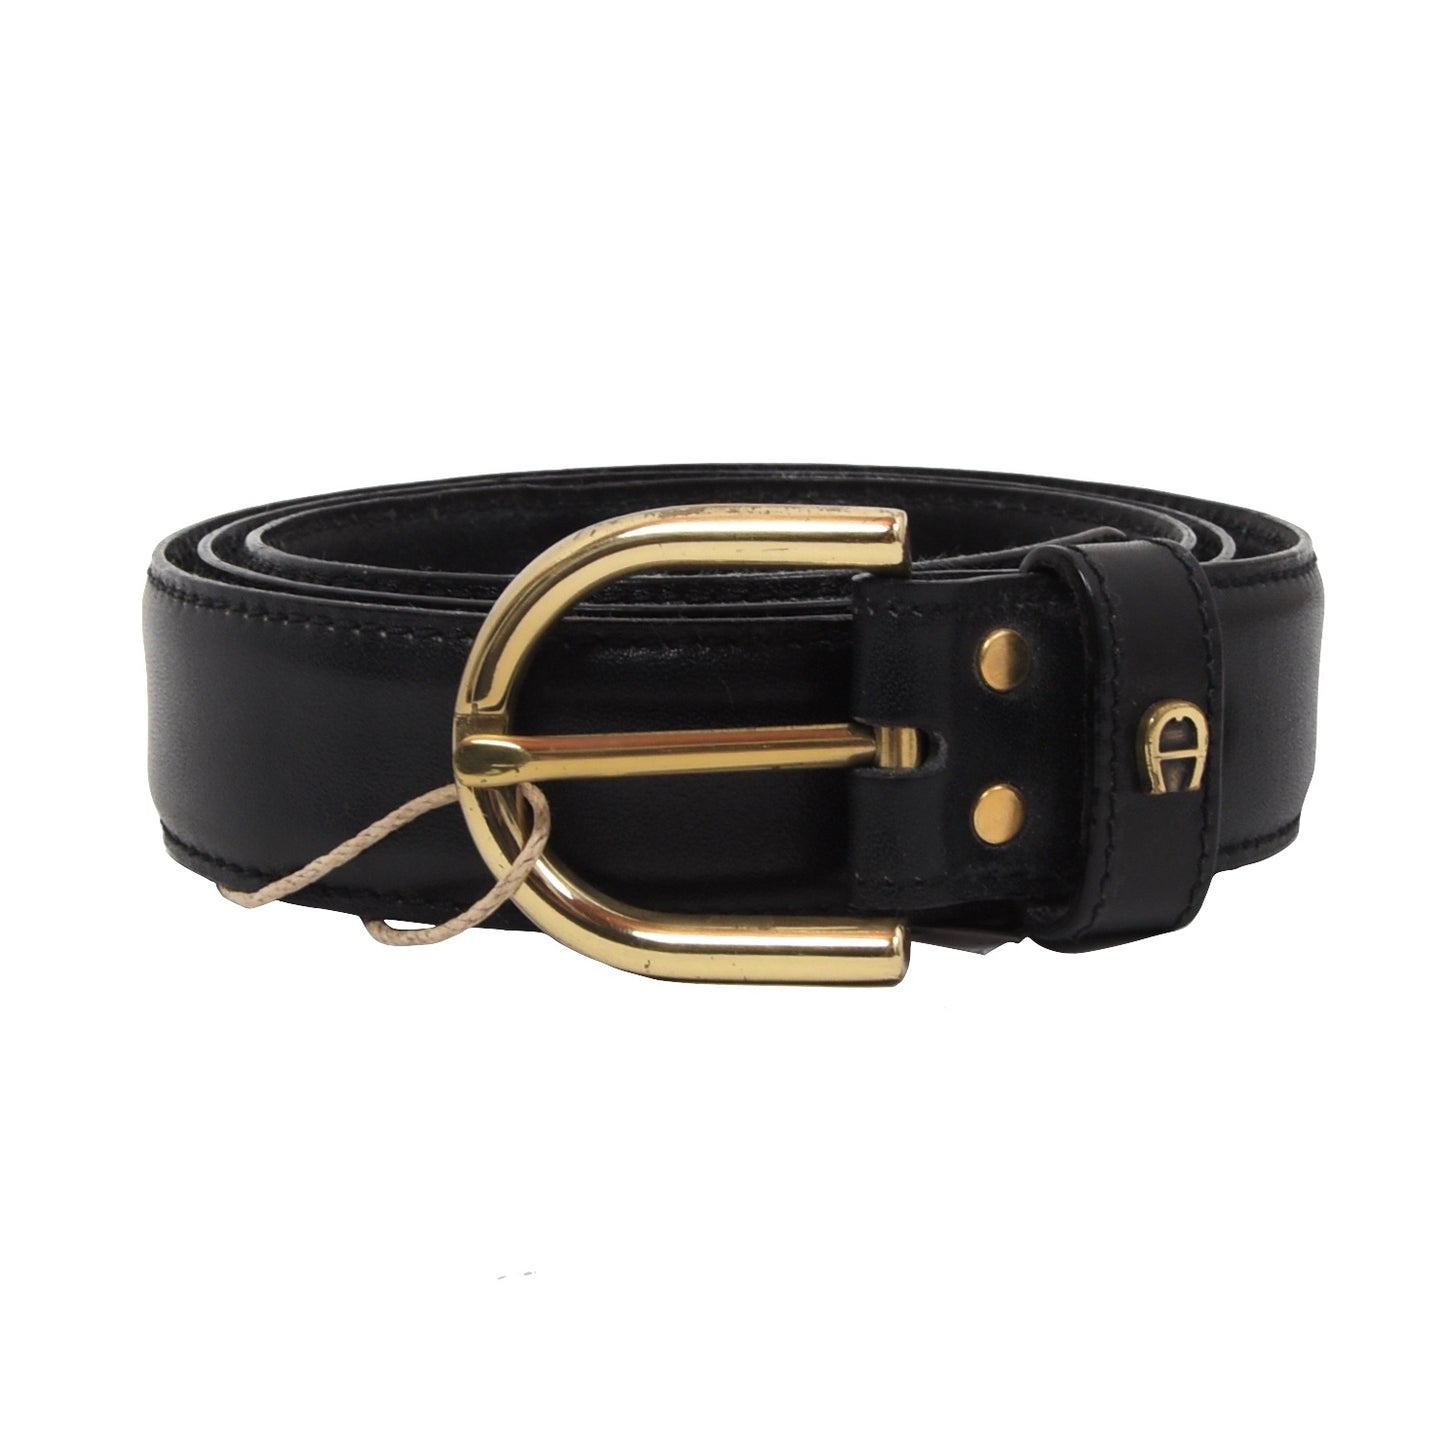 Etienne Aigner Leather Belt Size 90/36 - Black